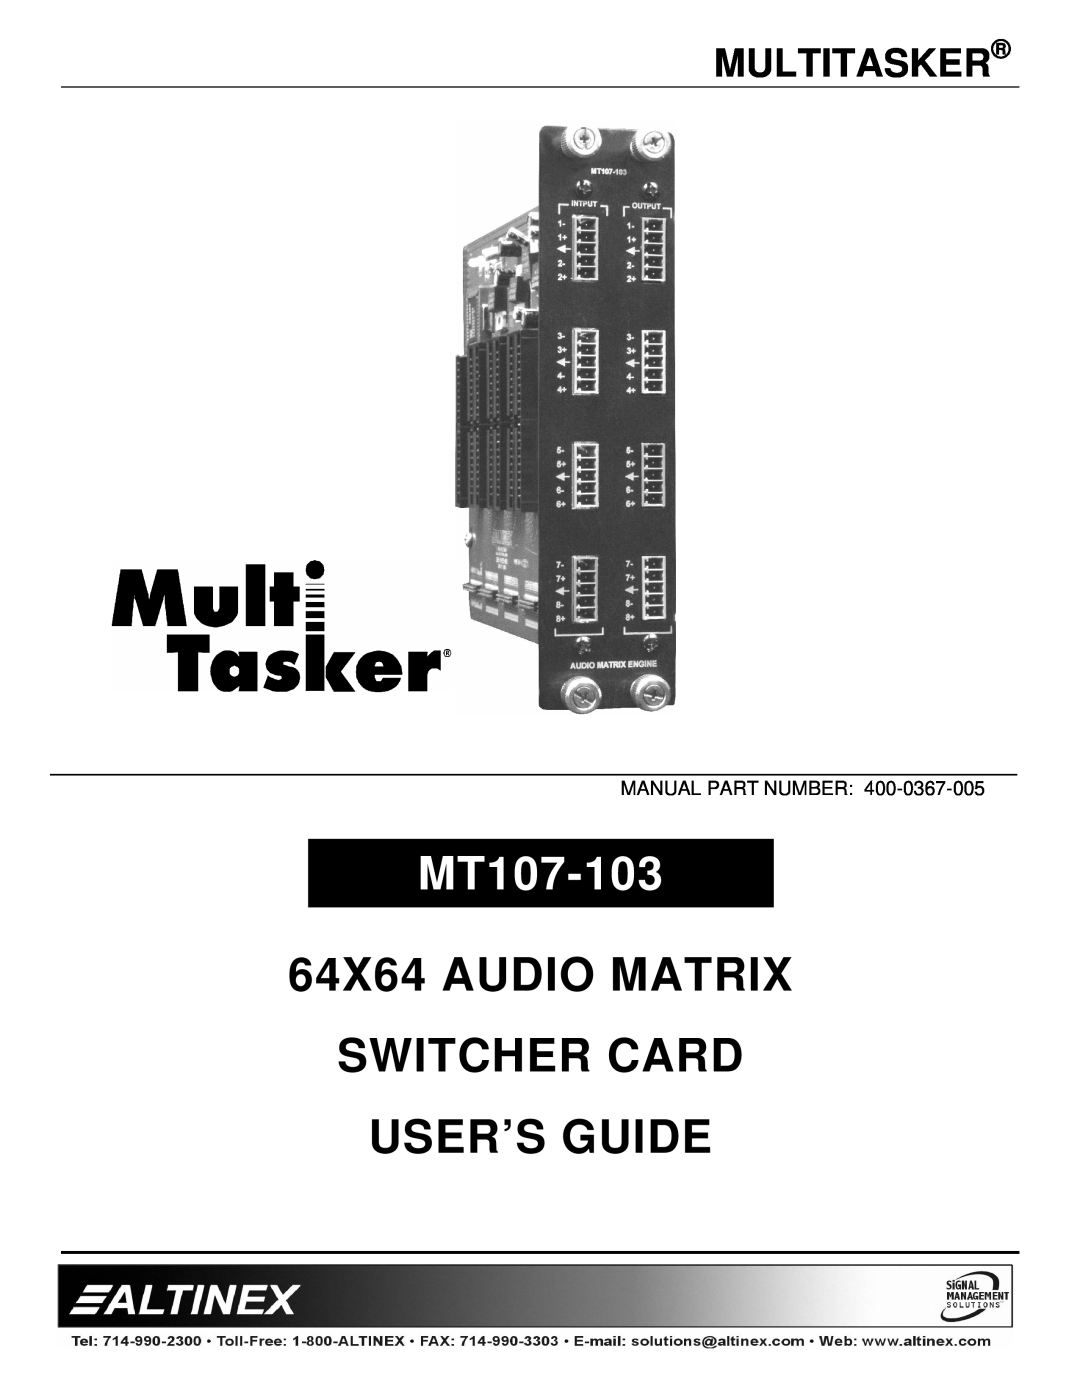 Altinex MT107-103 manual Multitasker, 64X64 AUDIO MATRIX SWITCHER CARD USER’S GUIDE 